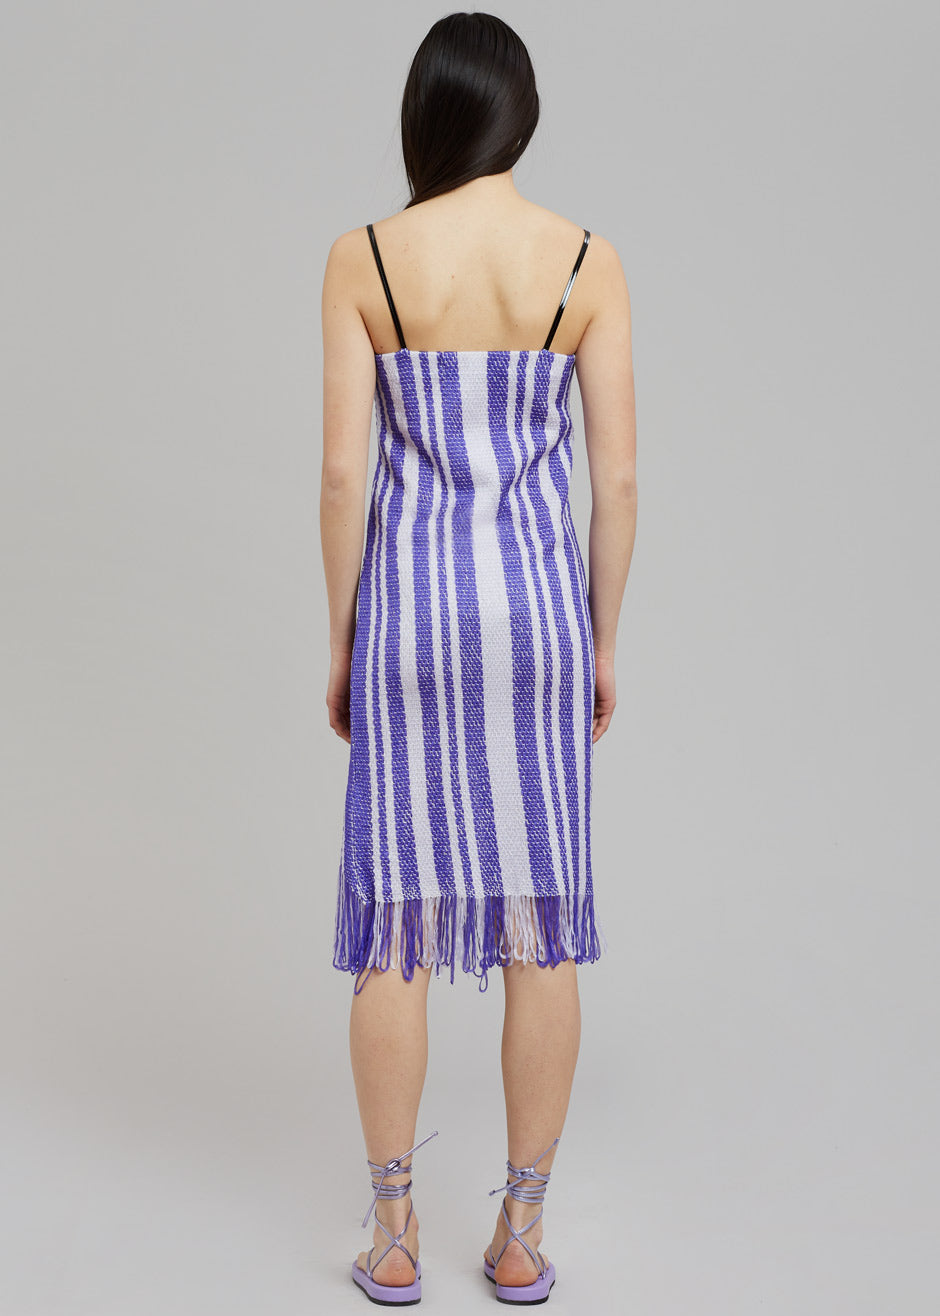 JW Anderson Fringe Detail Camisole Dress - Purple/White - 4